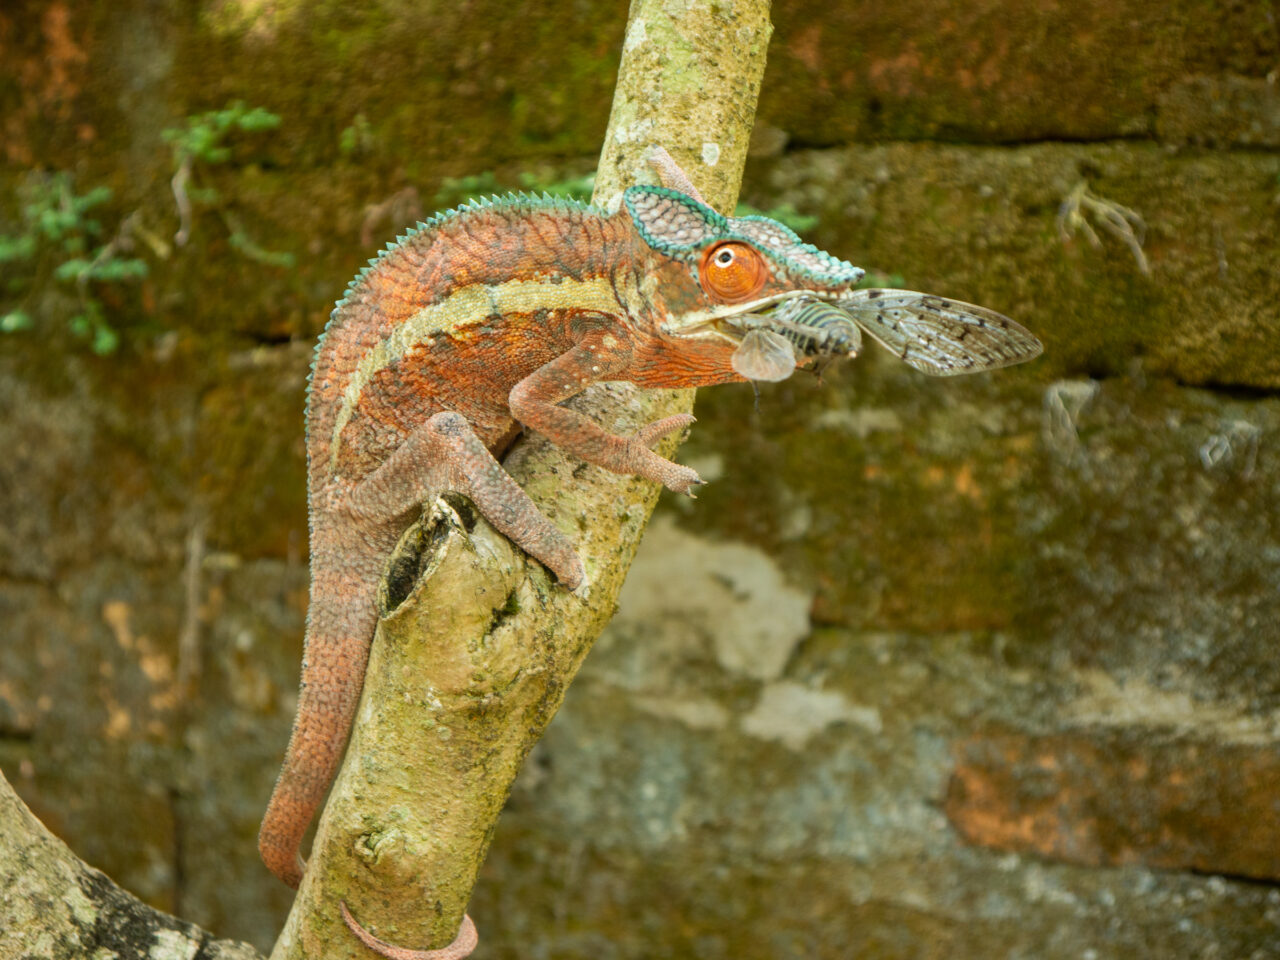 Chameleon at Peyreiras Reptile reserve in Madagascar